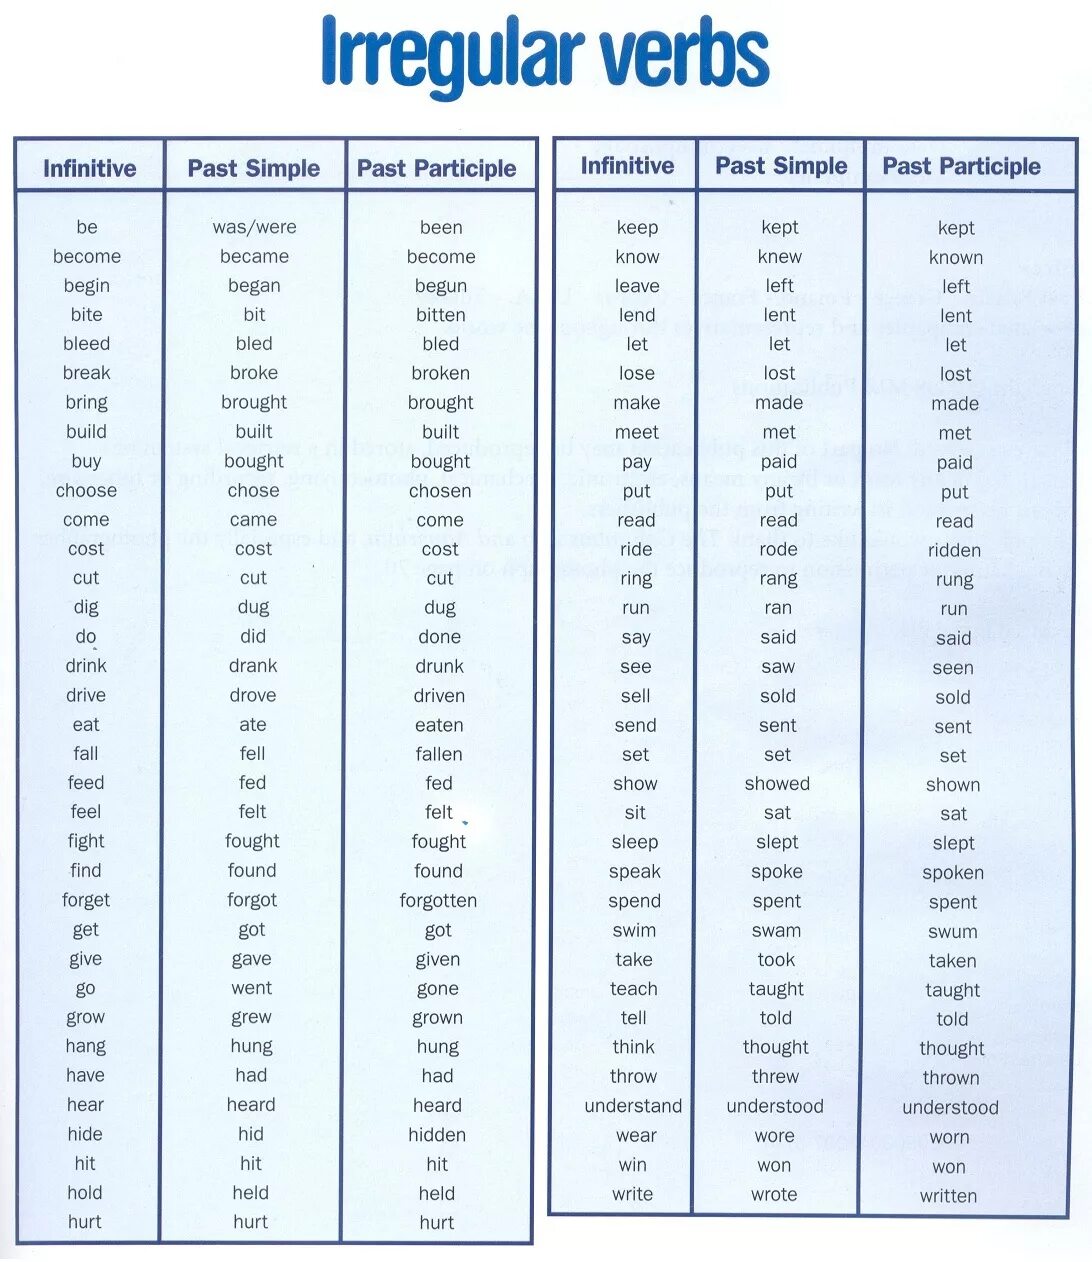 Past simple Irregular verbs таблица. Past simple таблица неправильных глаголов. Past participle неправильные глаголы. Неправильные глаголы английского Irregular verbs. Hear в прошедшем